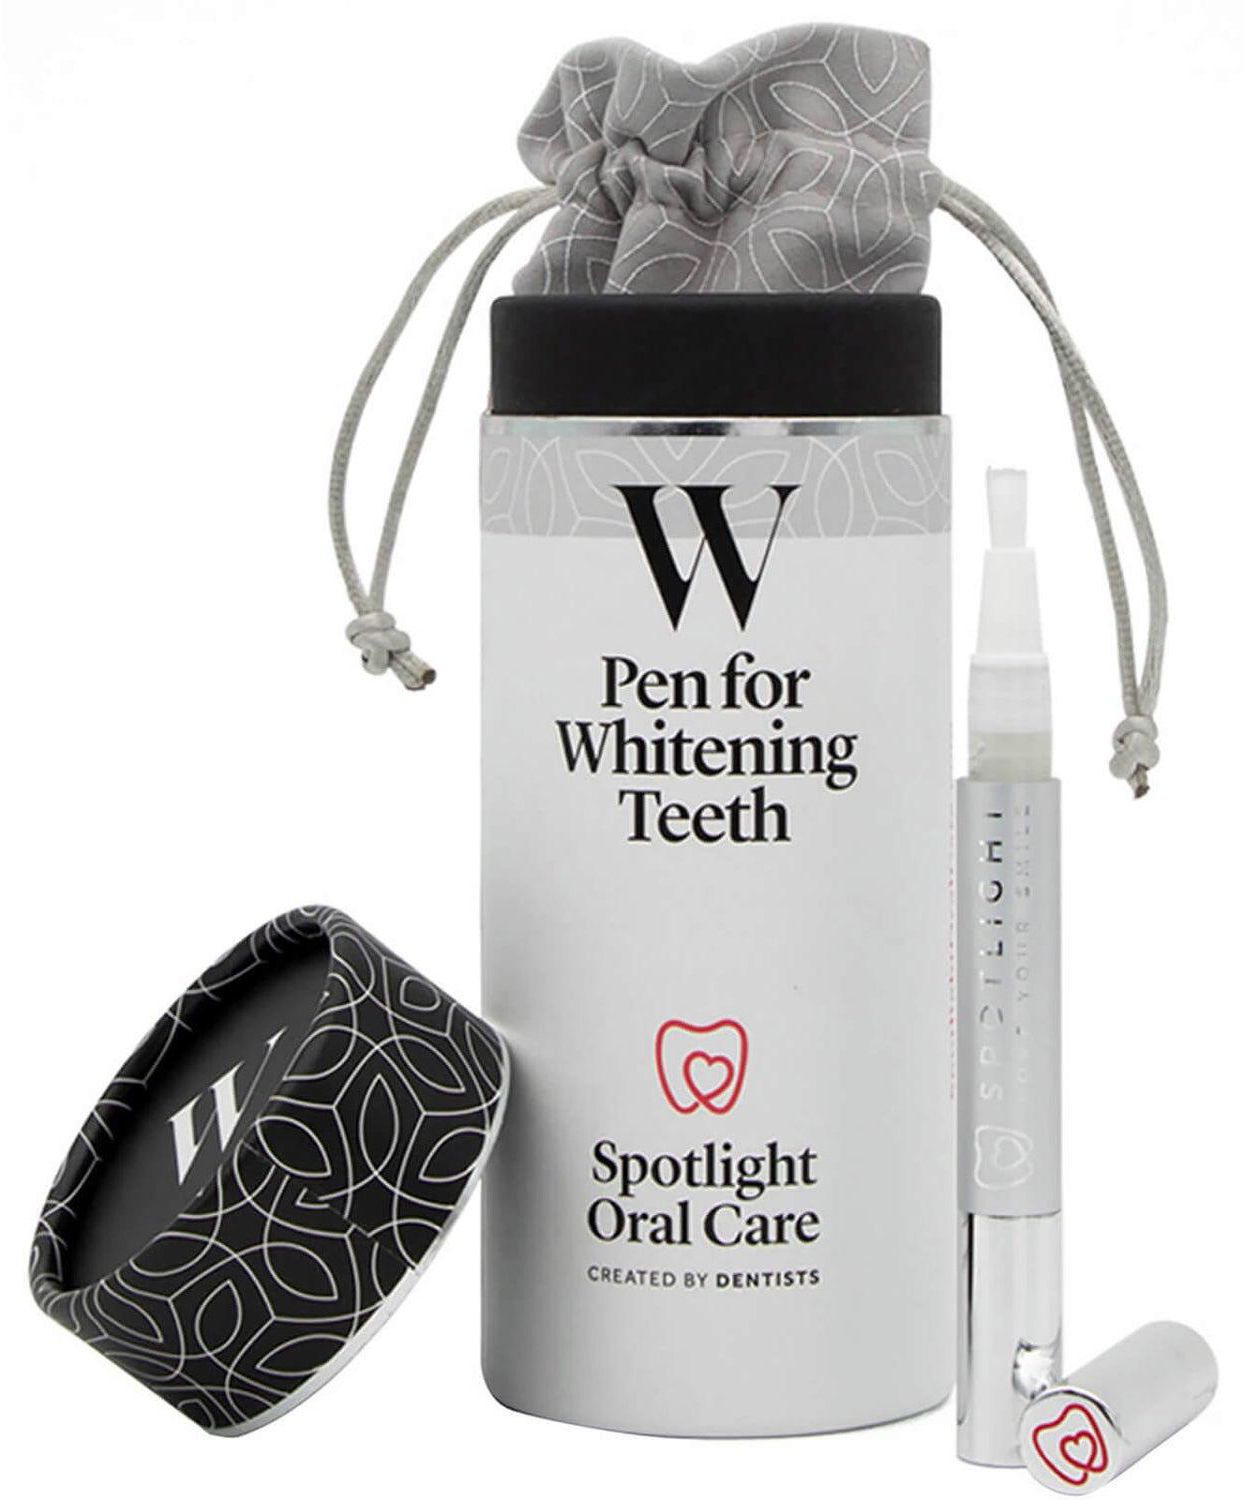 Spotlight Whitening Teeth Whitening Pen